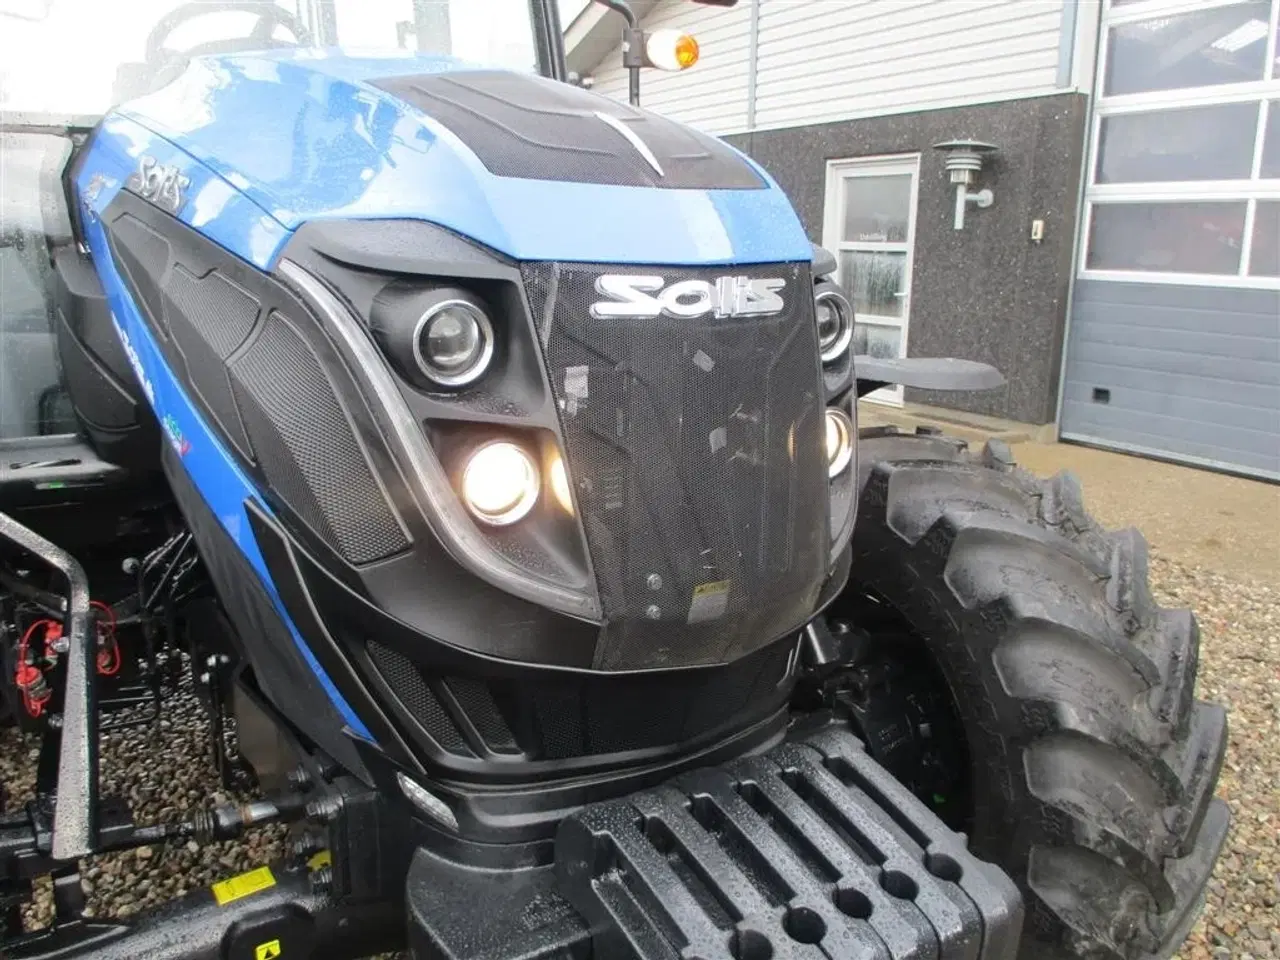 Billede 20 - Solis 90 Fabriksny traktor med 2 års garanti, lukket kabine med klima anlæg, og krybegear samt vendegear.